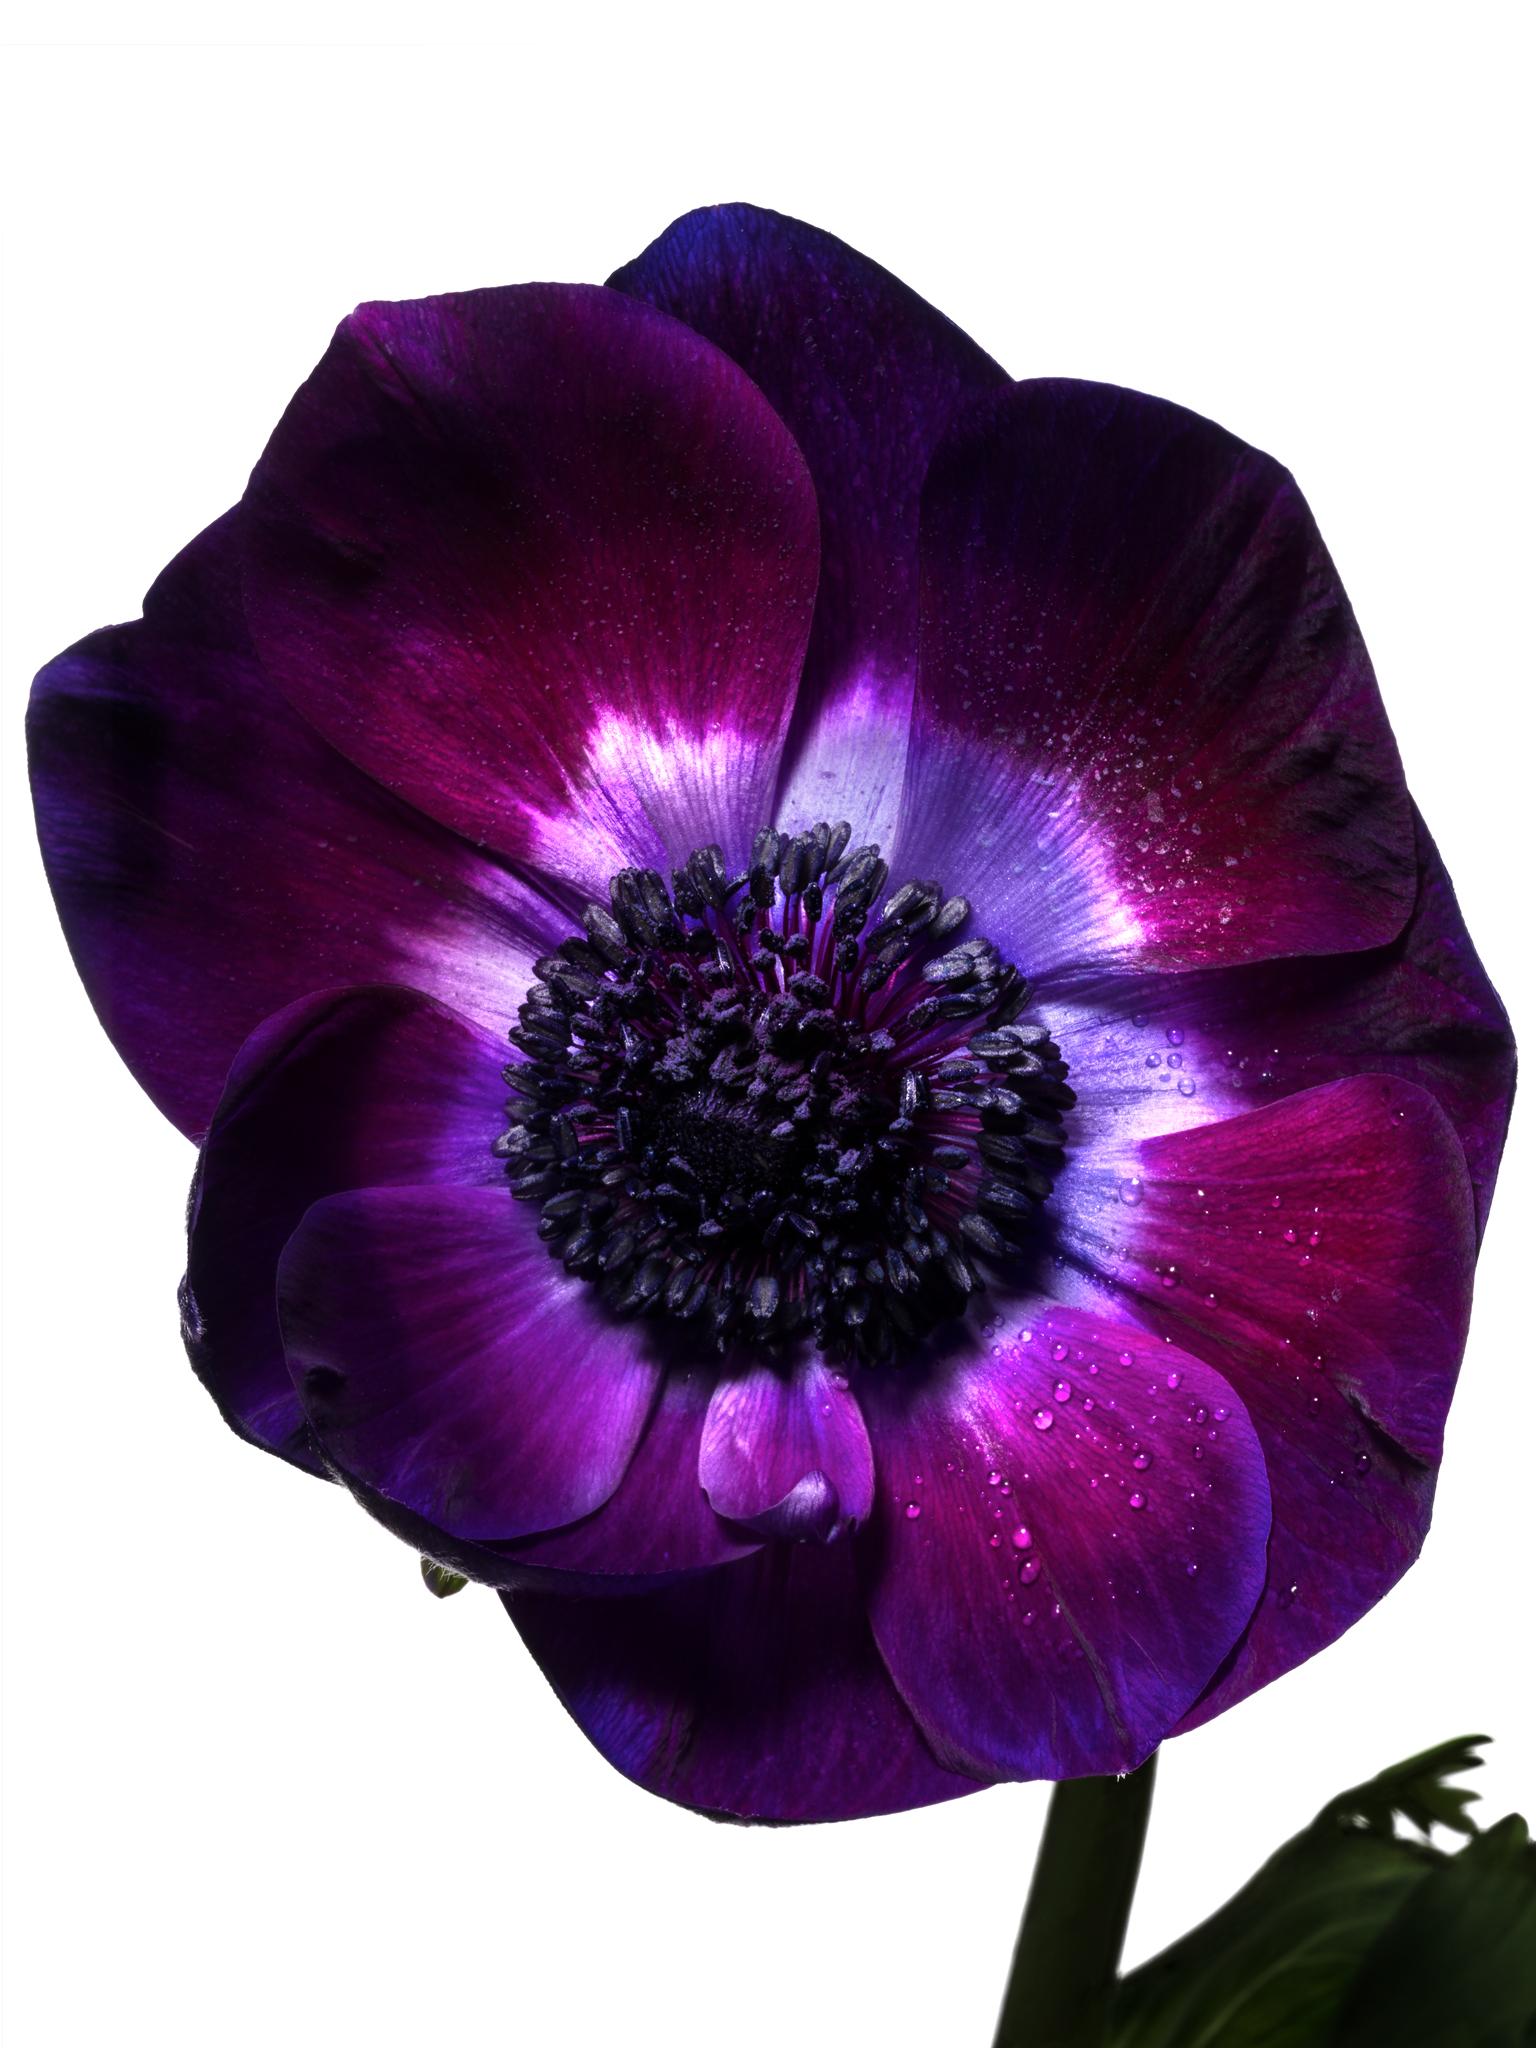 Flora Italiana ( Purple Anenome ) - large format botanical still life photograph